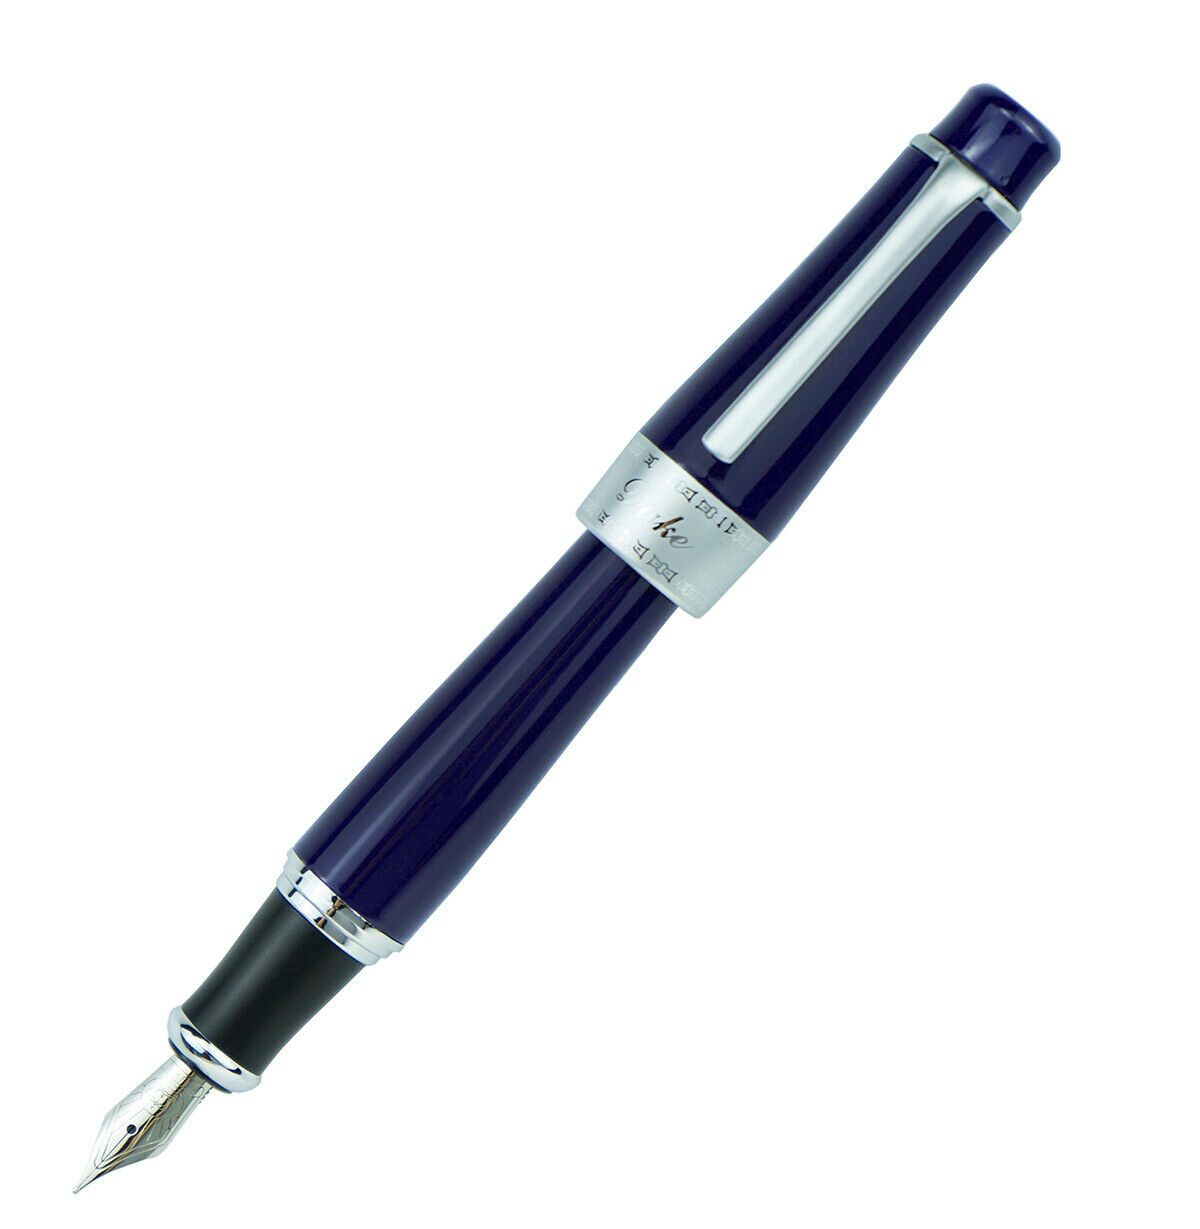 Перьевая ручка Duke Memory Charlie Chaplin, Китай. Перо FM (0.6 мм), заправка поршень. Цвет синий. Снова в продаже!